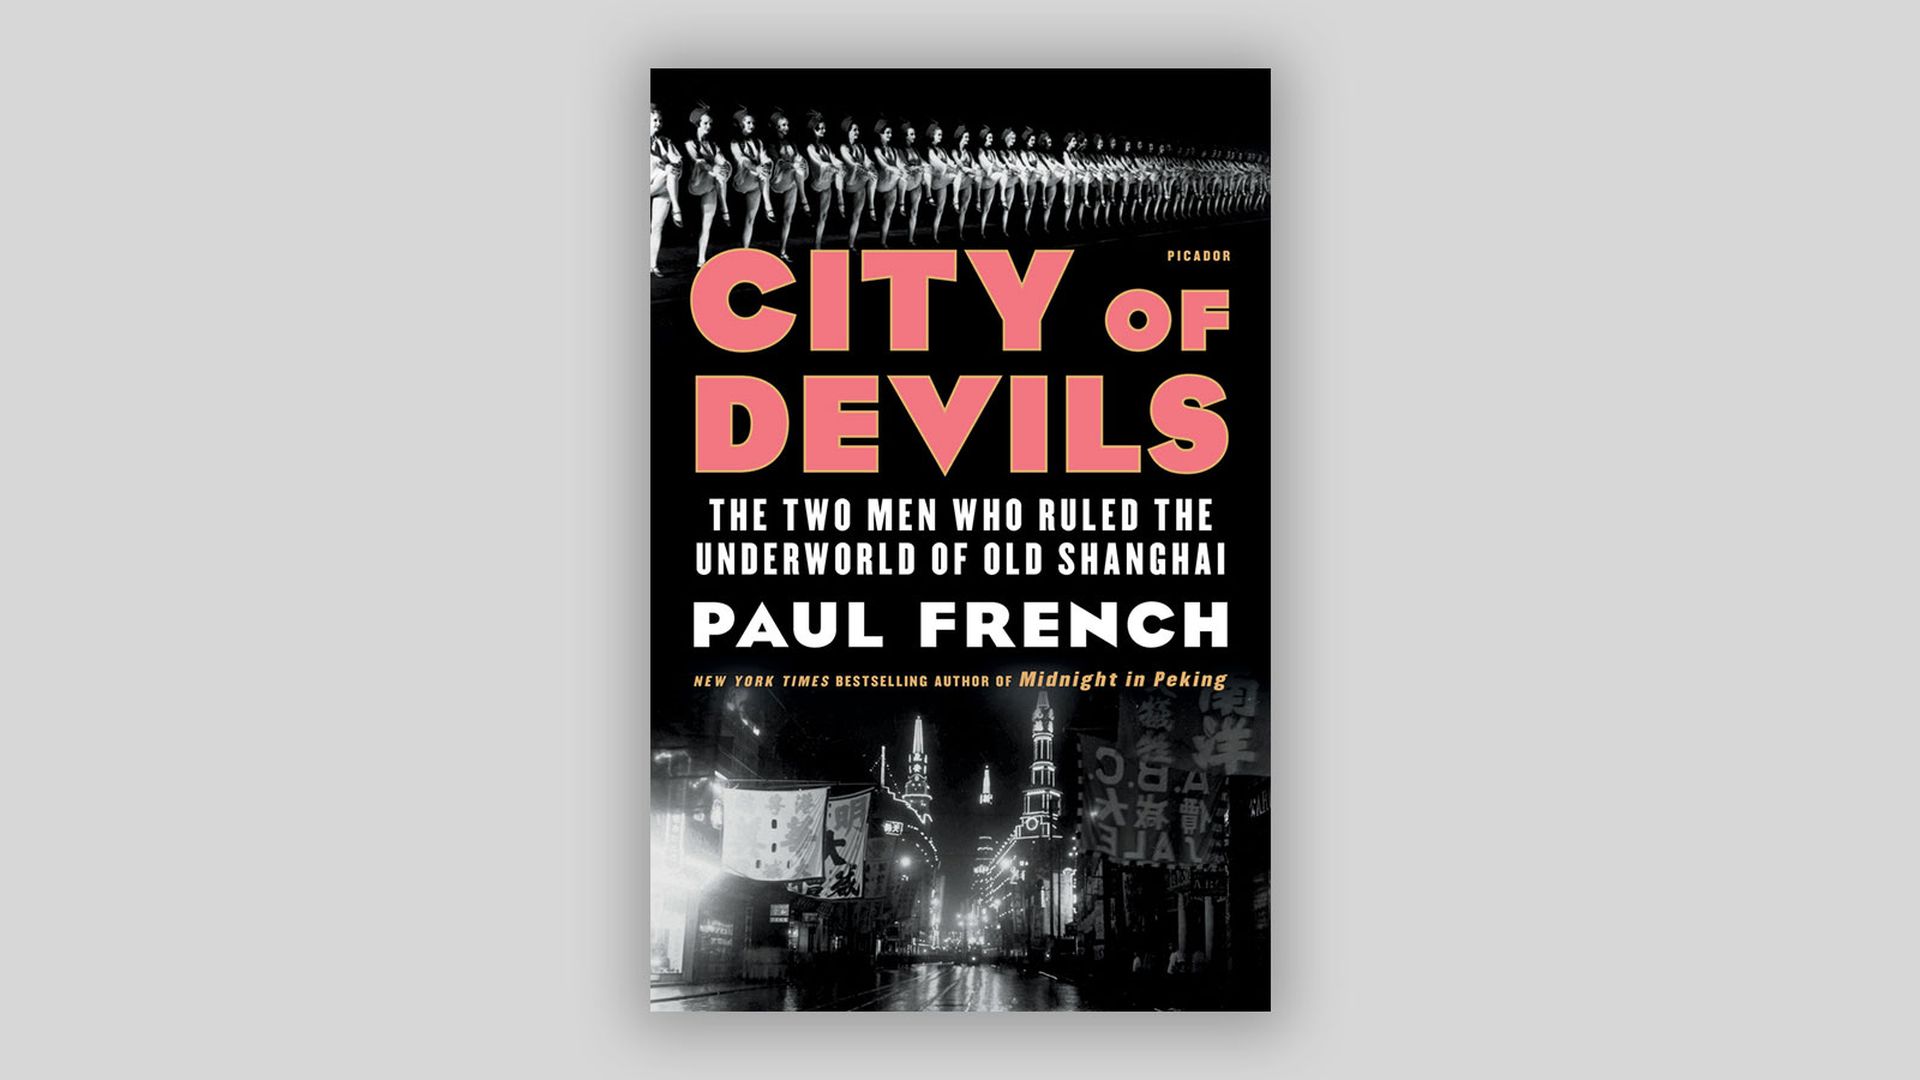 Screenshot of book titled "City of Devils"